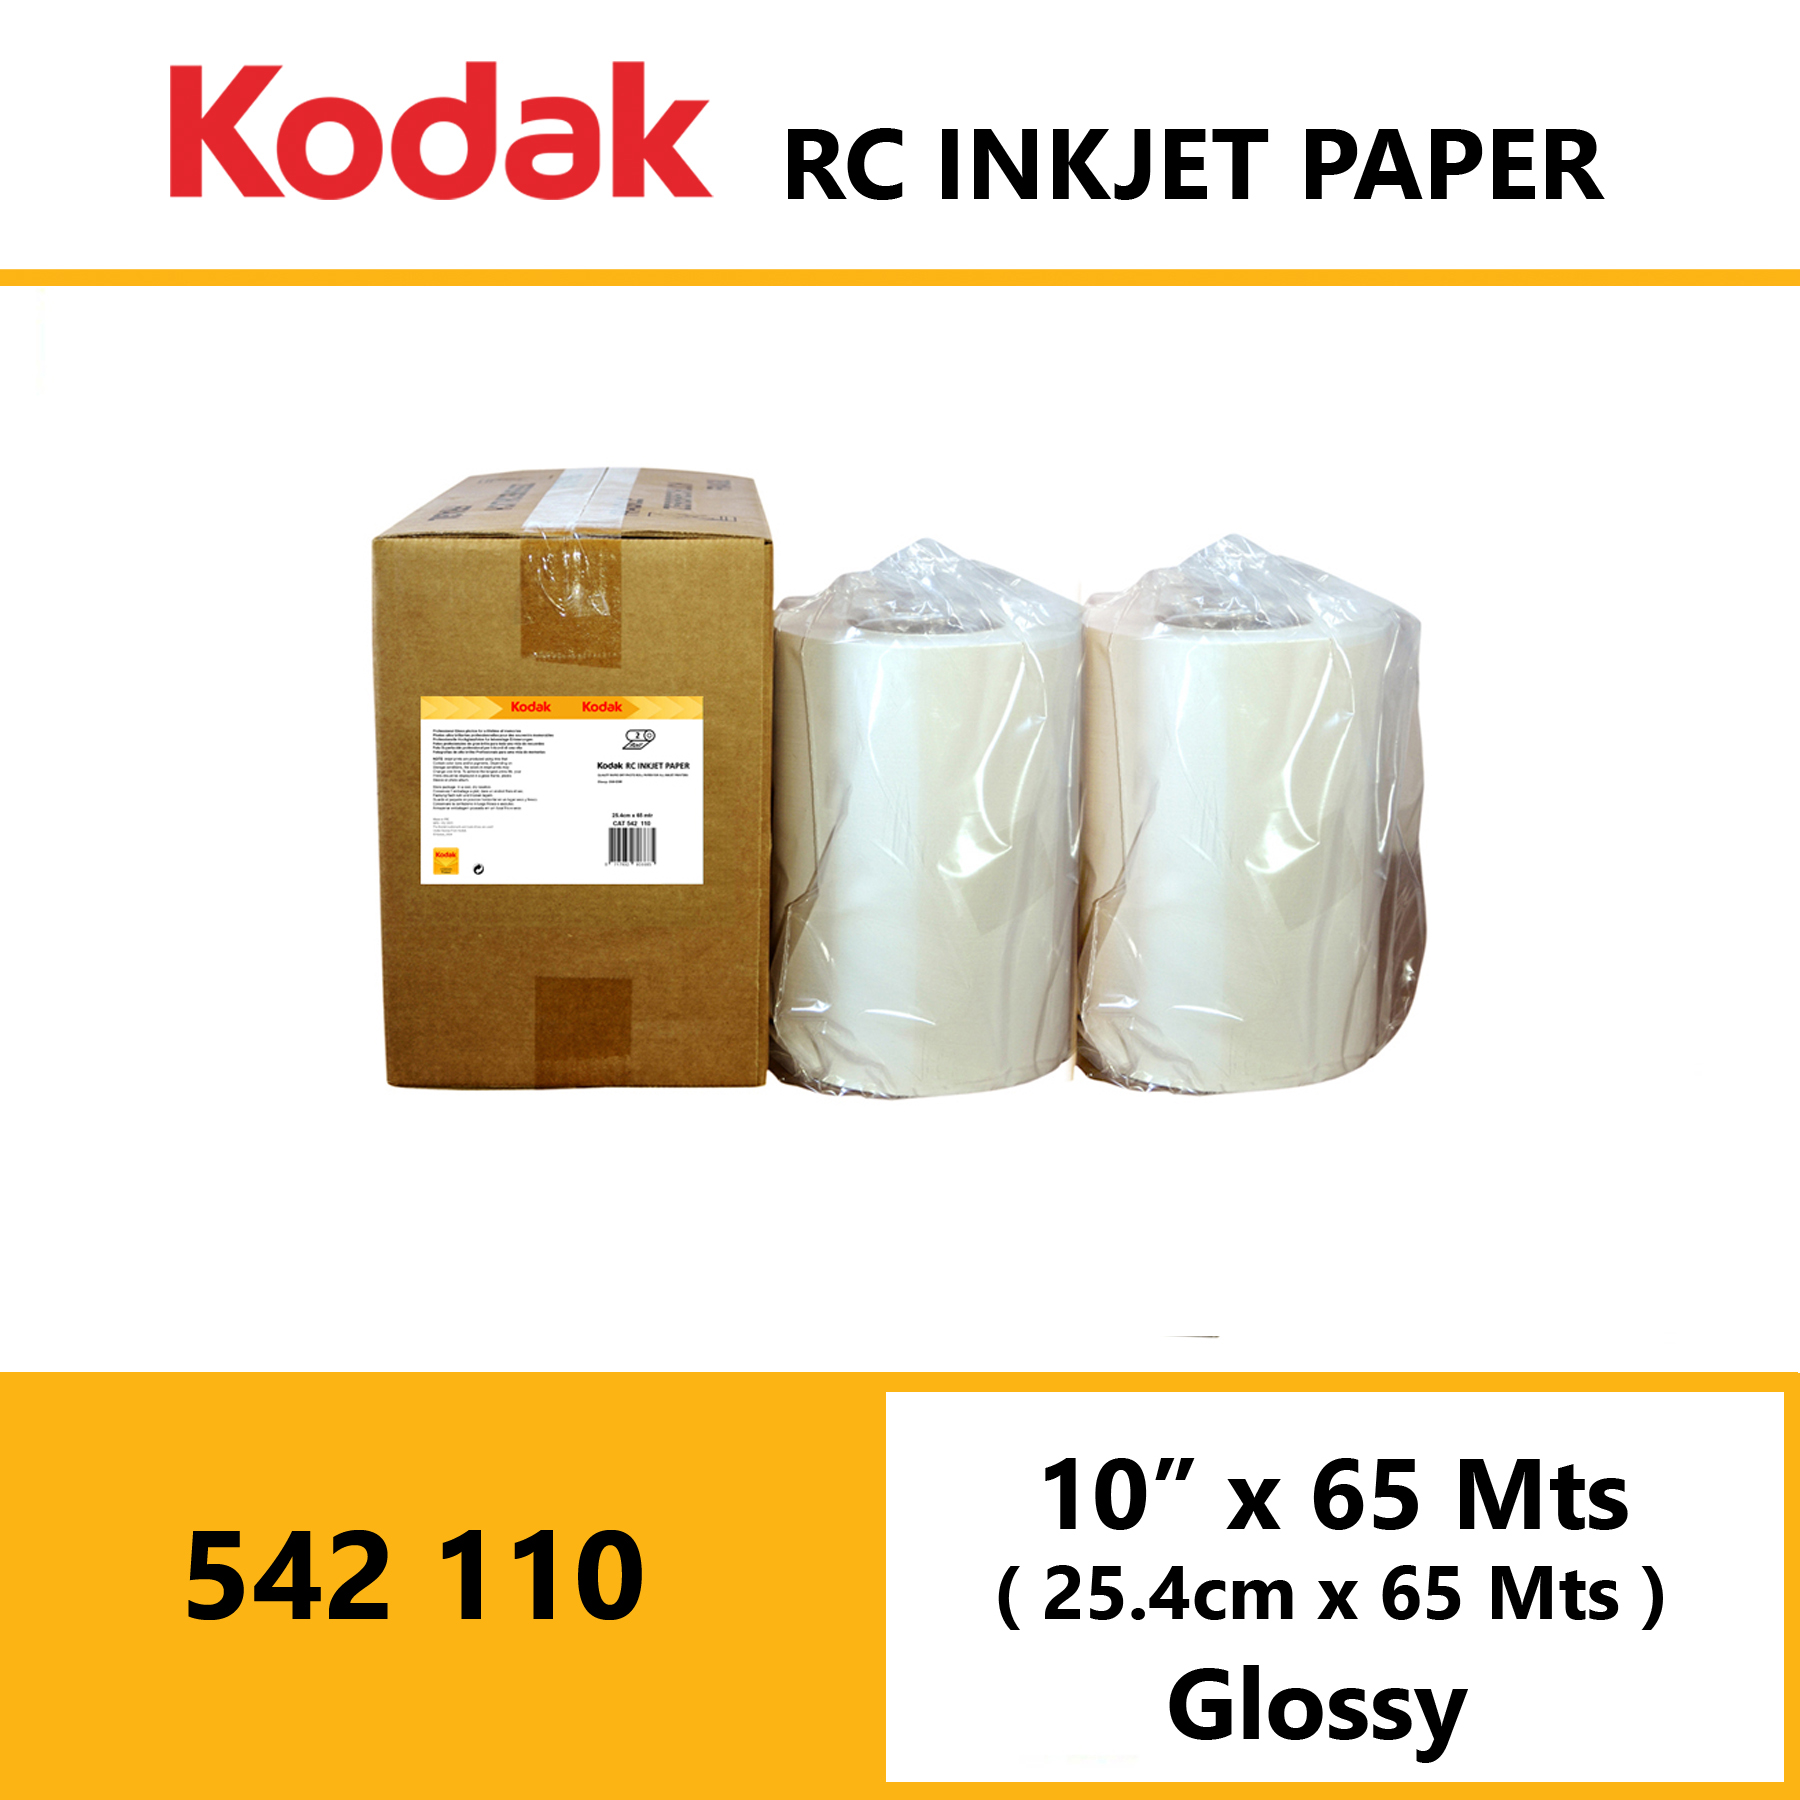 Kodak Inkjet RC Paper 10 ” x 65 Mtrs Glossy